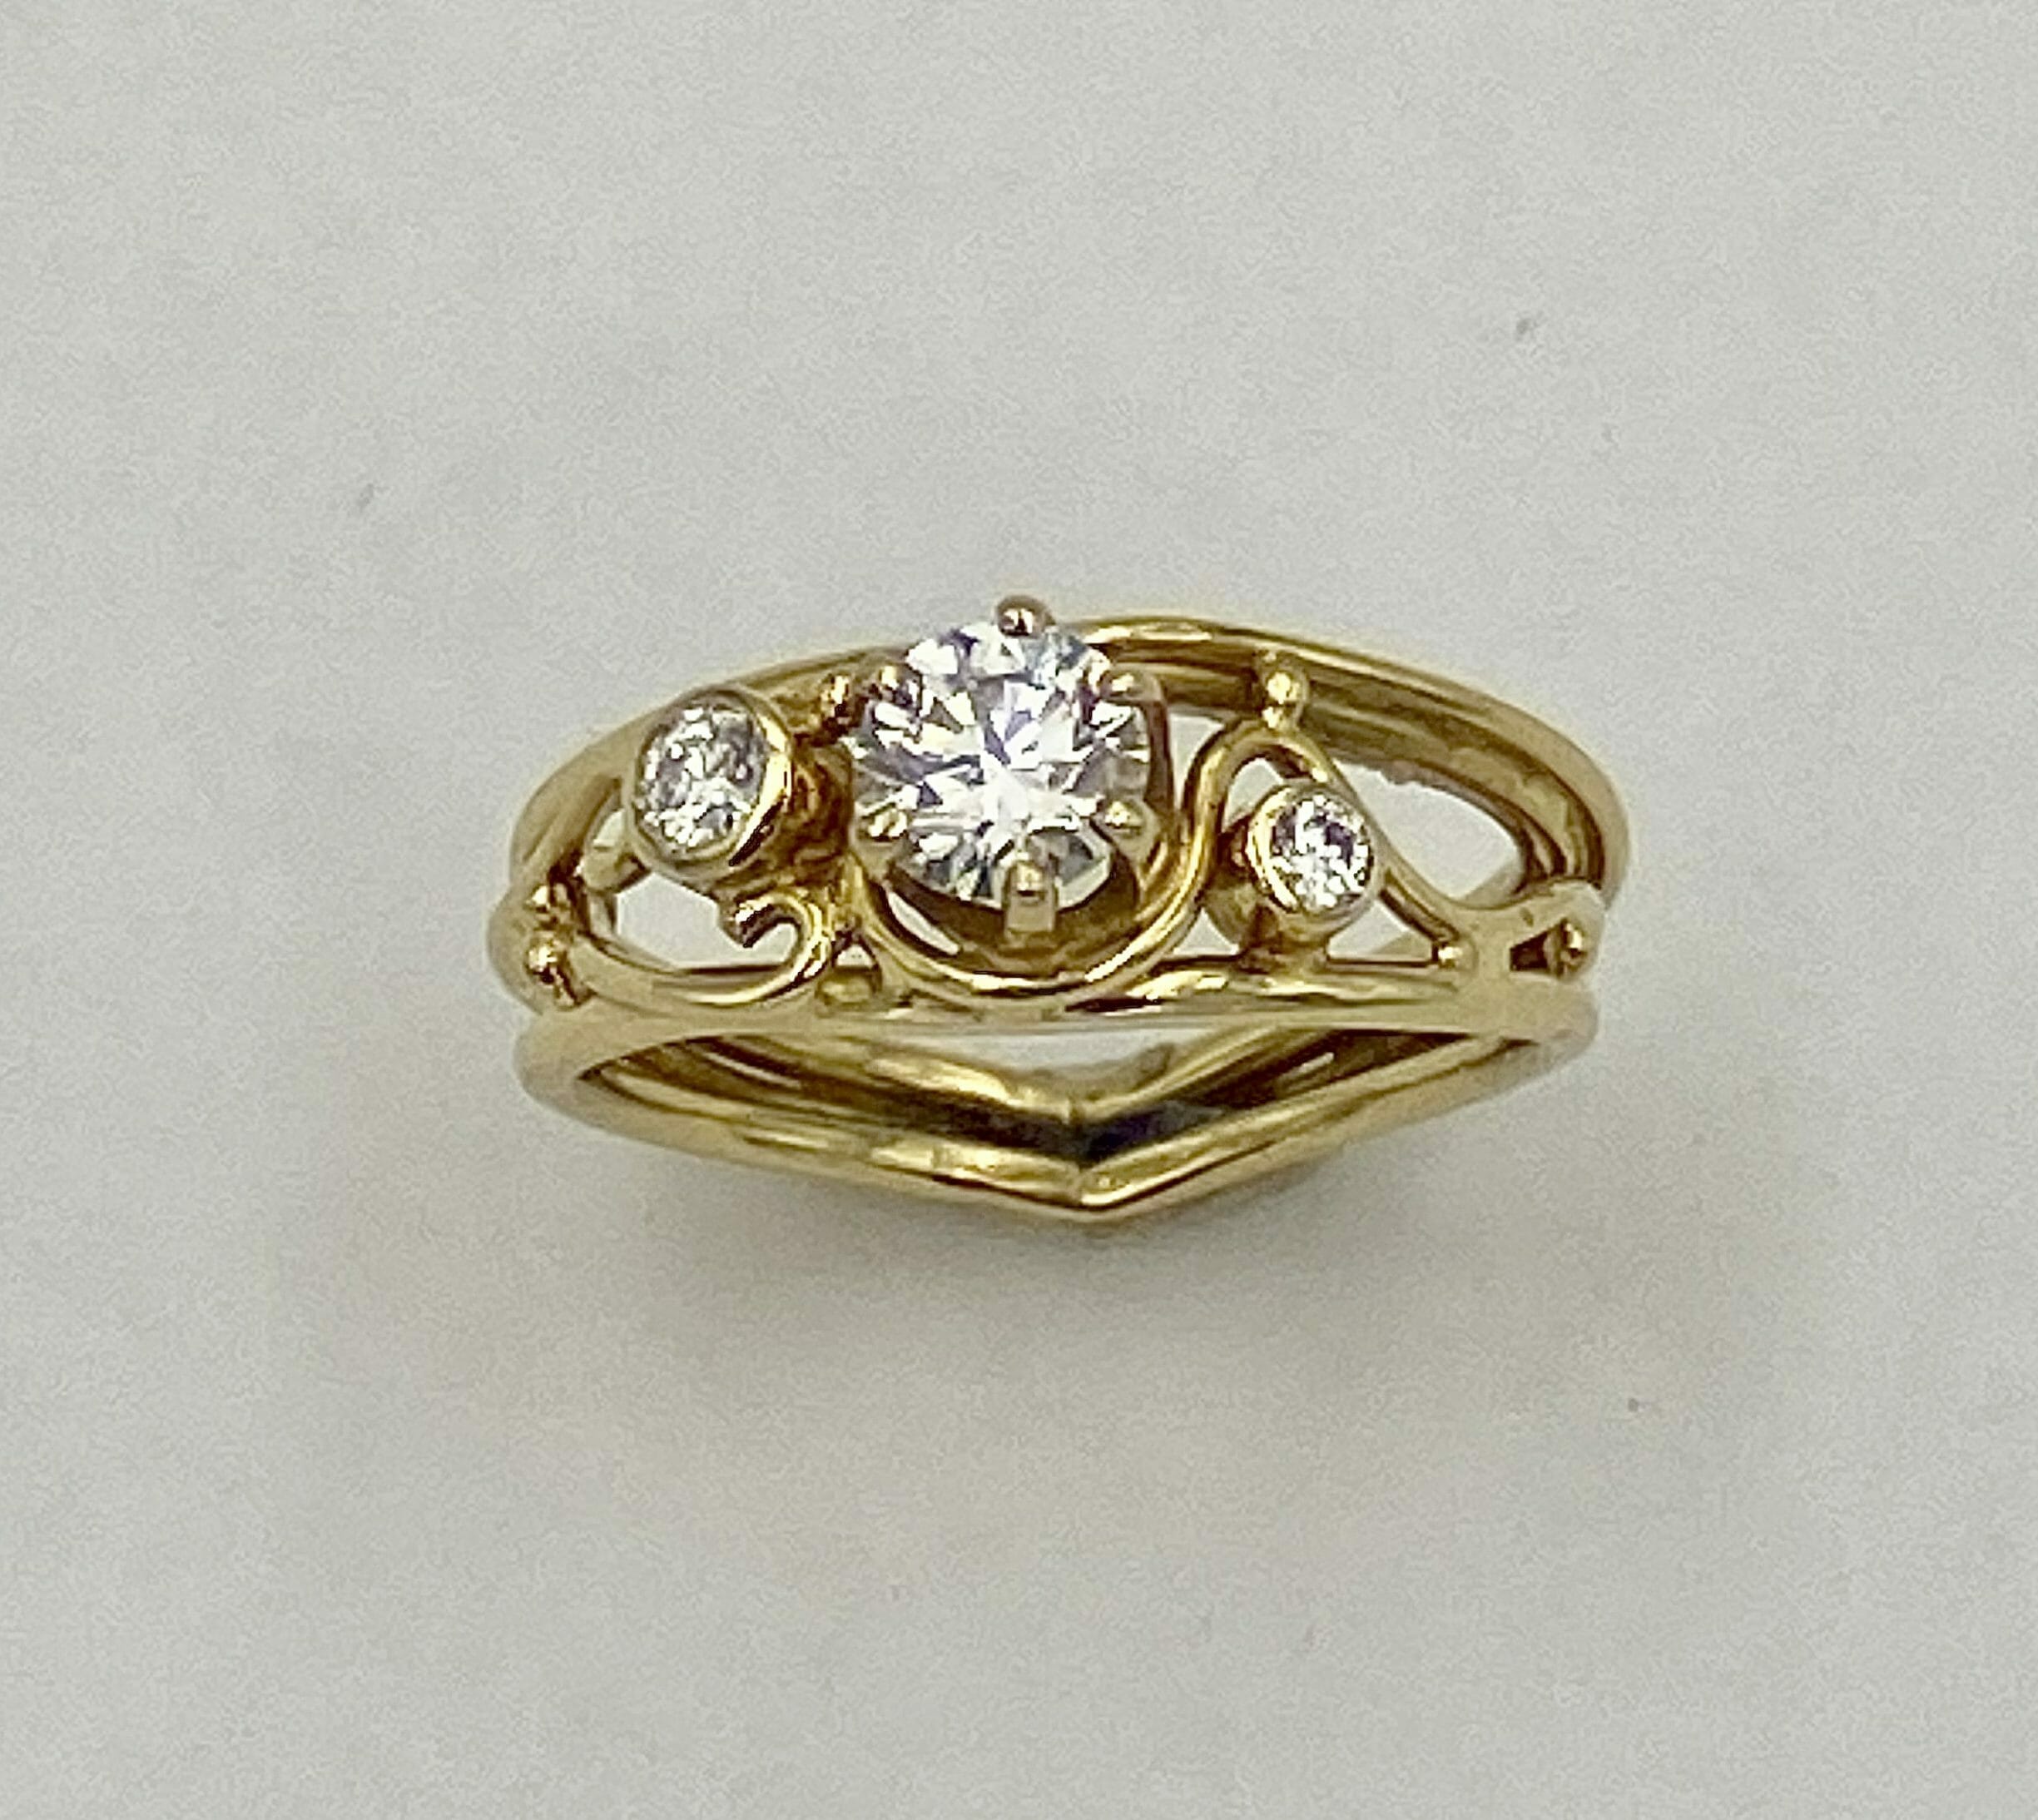 VS1 clarity ideal cut diamond ring - Spirer Jewelers